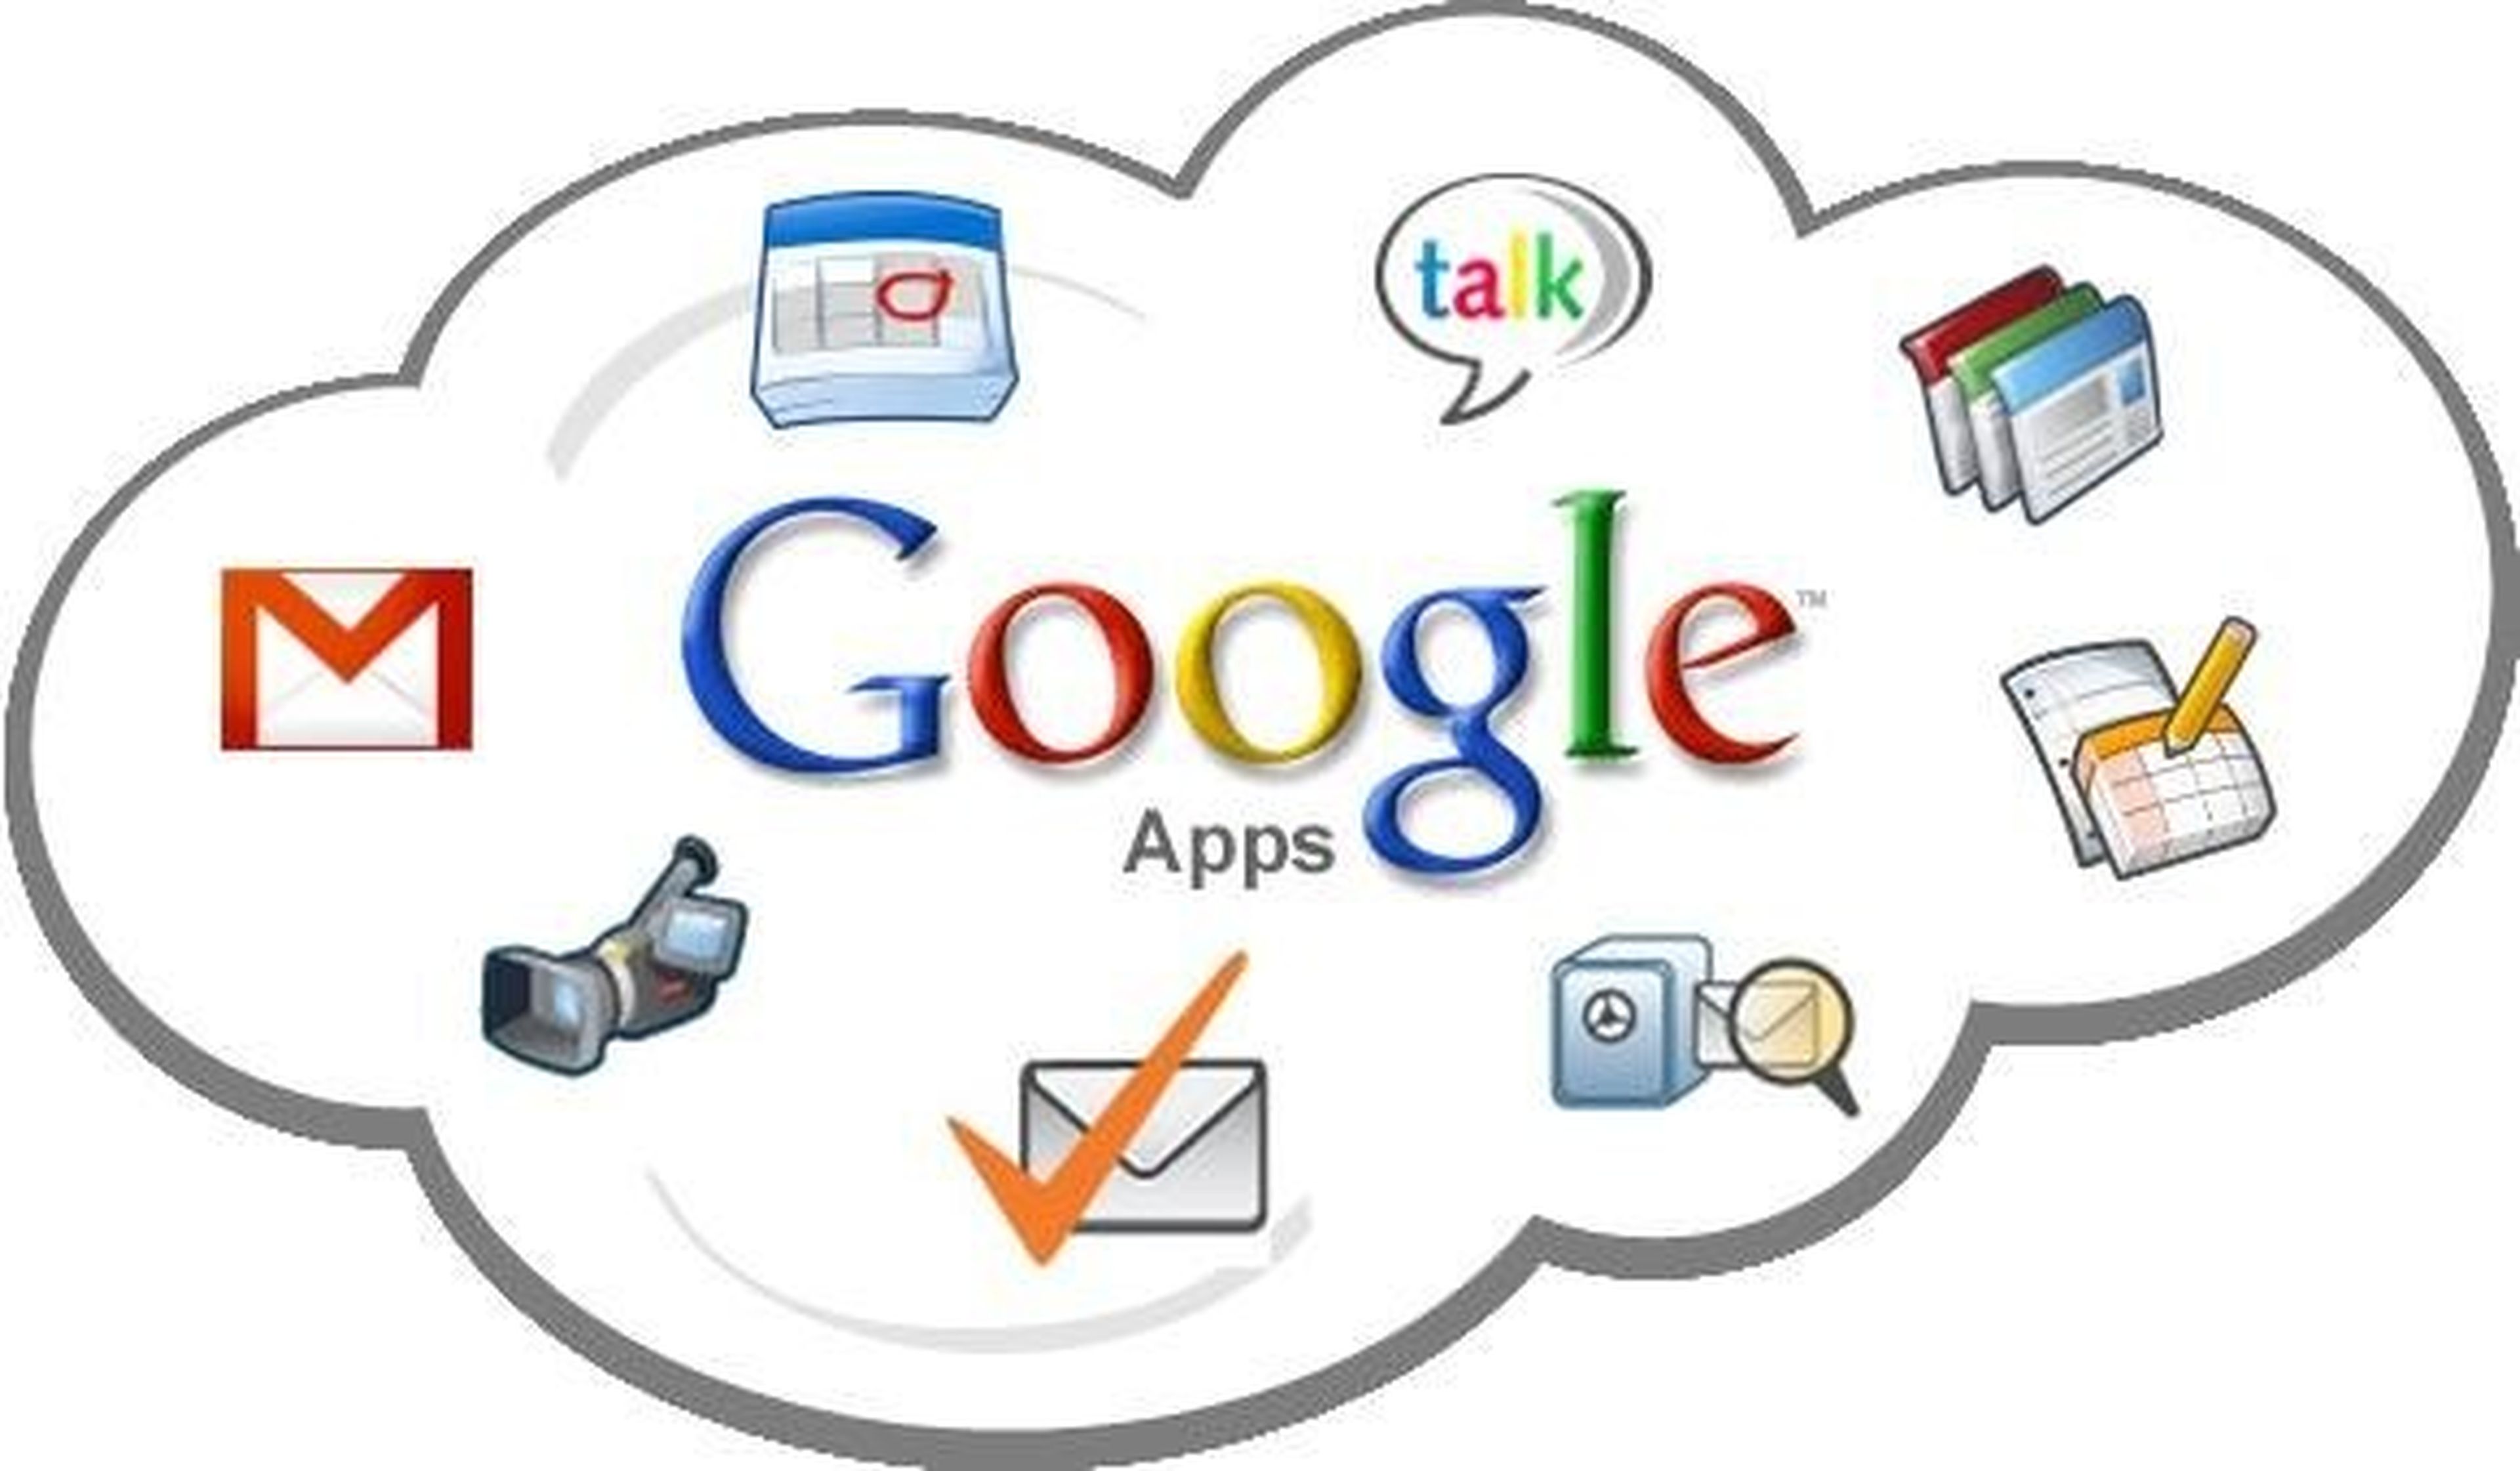 Сервис гугл сайт. Google apps. Сервисы Google. Облачные сервисы гугл. Значки сервисов Google.